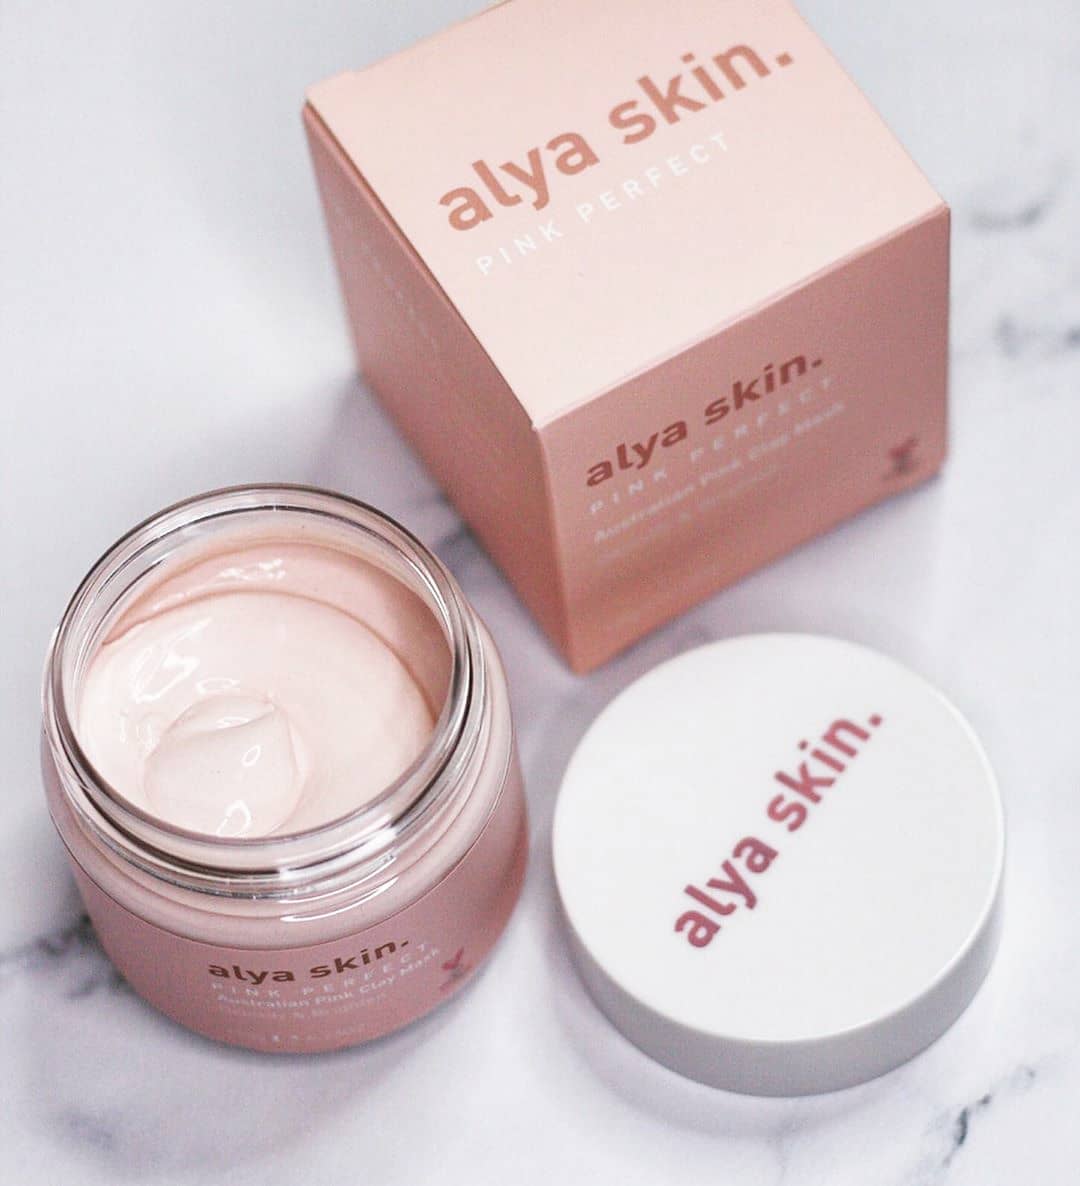 Alya Skin promo image